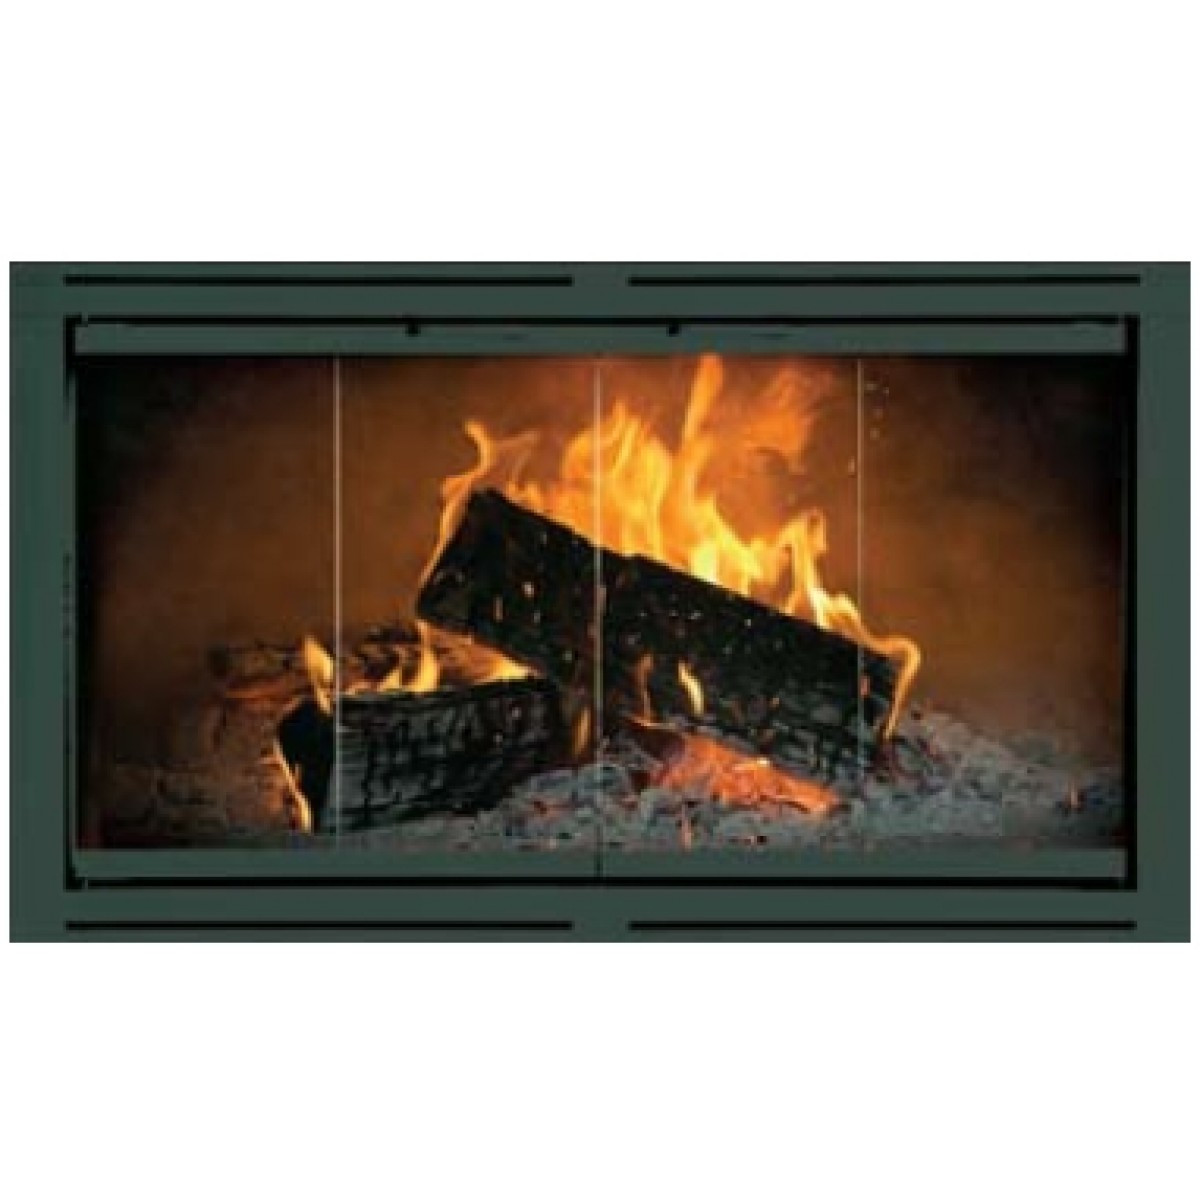 Best ideas about Heatilator Fireplace Doors
. Save or Pin The Heritage Z Heatilator Fireplace Doors Now.